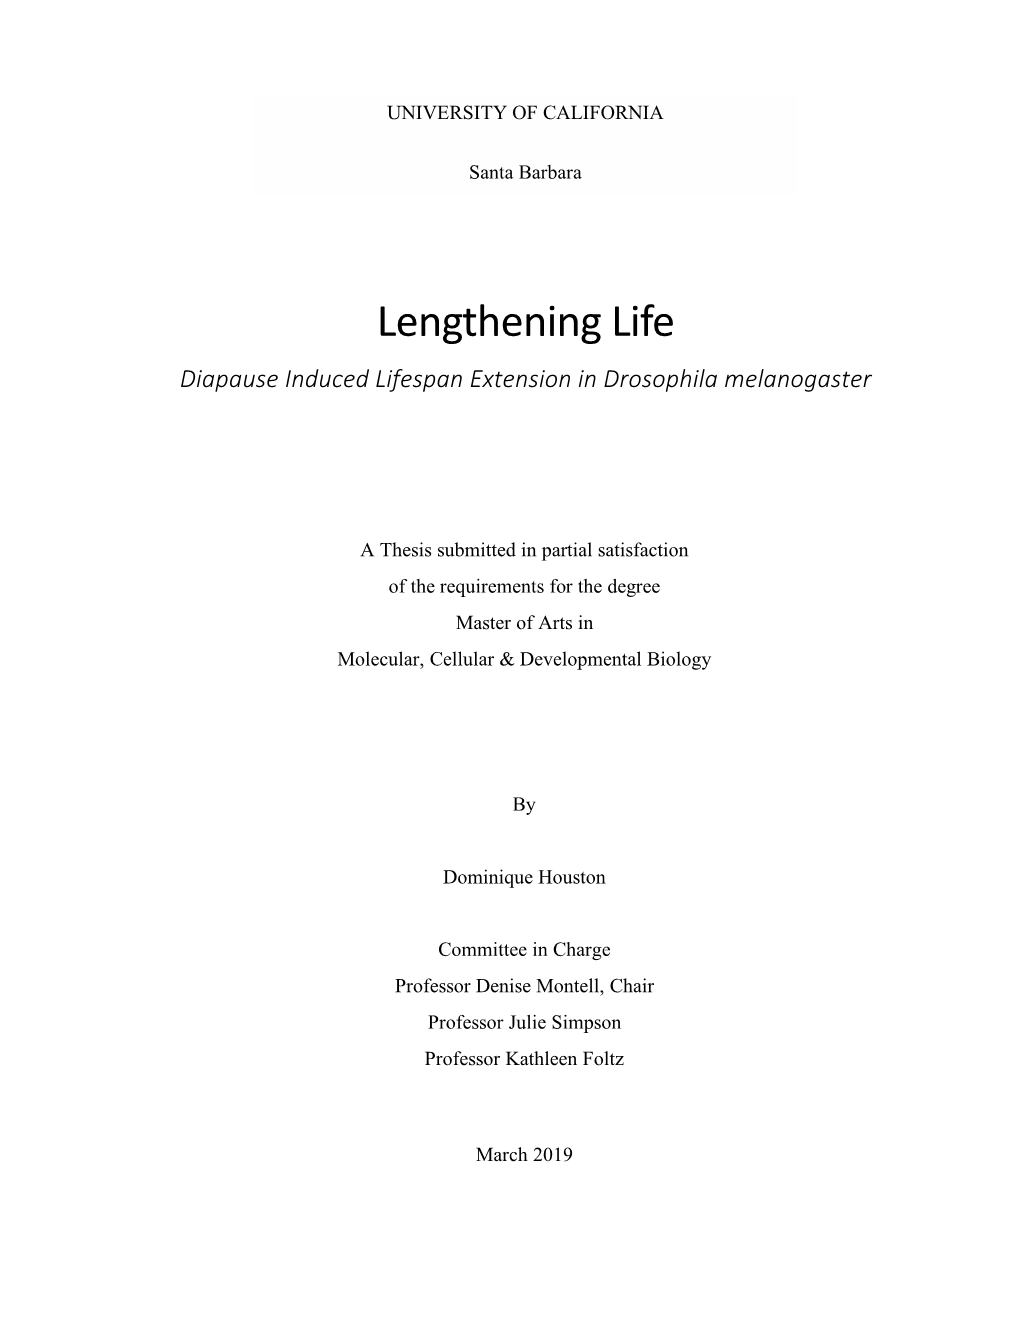 Lengthening Life Diapause Induced Lifespan Extension in Drosophila Melanogaster